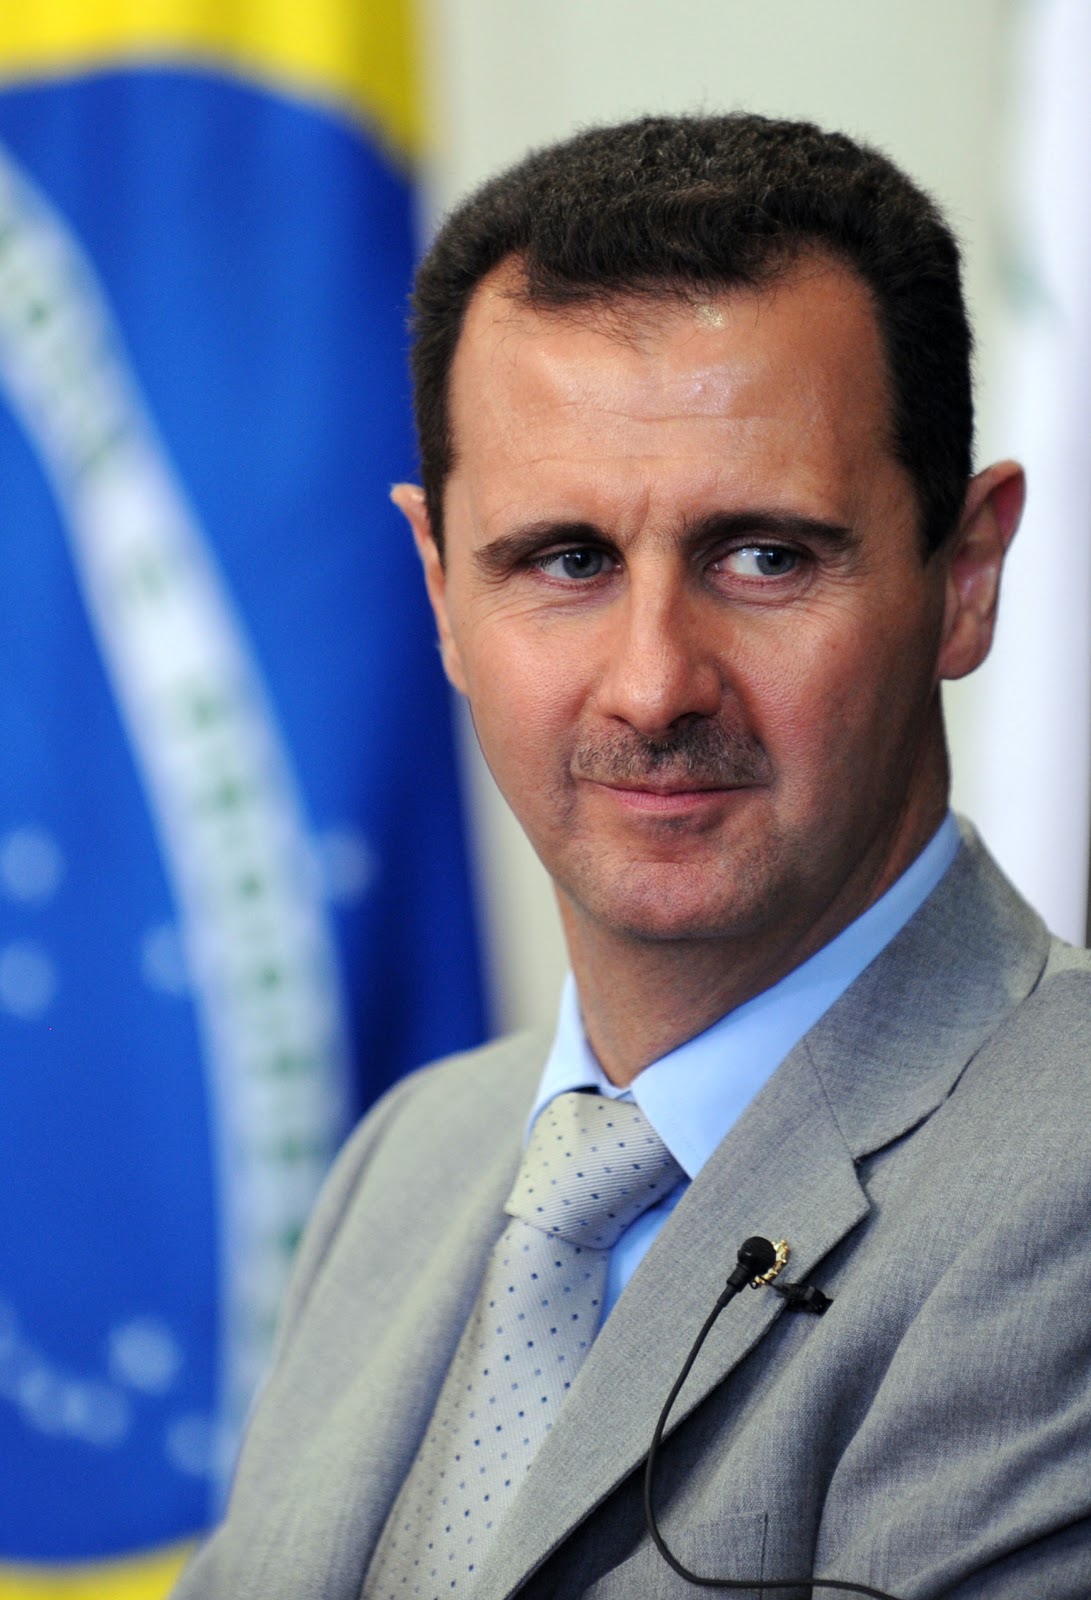 http://2.bp.blogspot.com/-gvZw0JHSVps/UAccfRgwVII/AAAAAAAAIv4/jYkO4lPtRNQ/s1600/1080-Bashar_al-Assad+File+Photo+-+FABIO+RODRIGUES-POZZEBOM-ABR.jpg